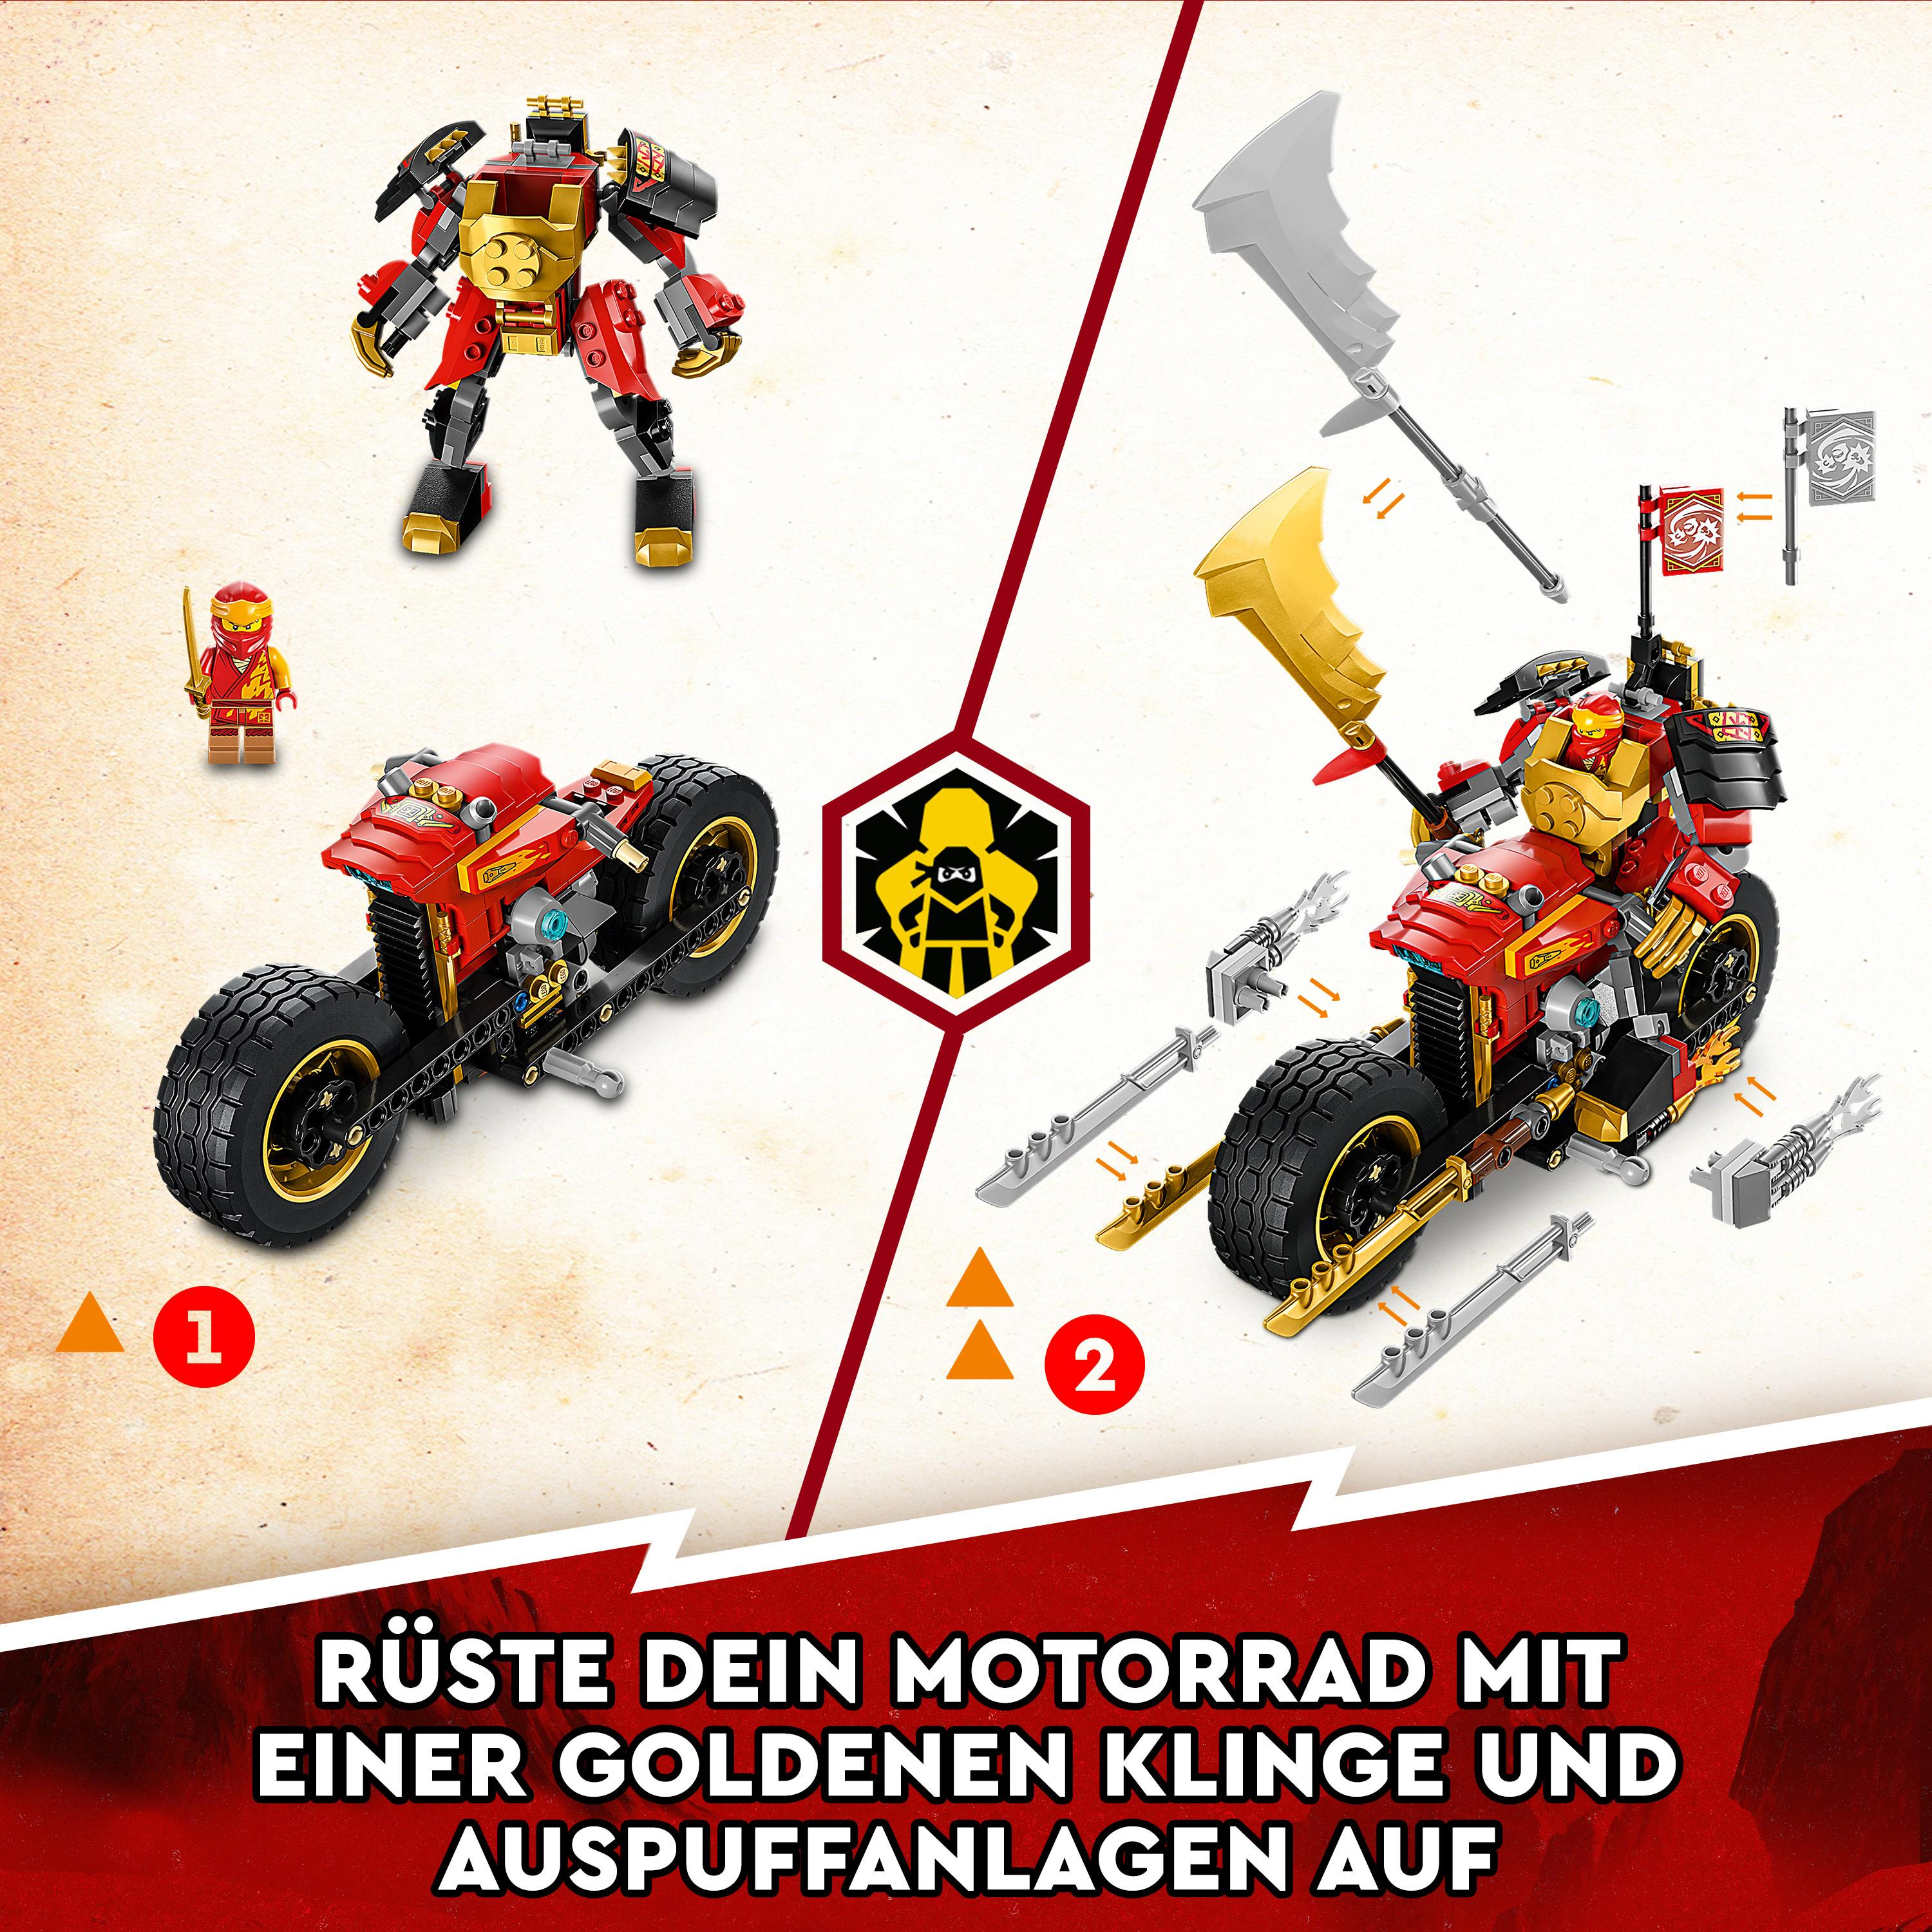 LEGO NINJAGO 71783 Kais Bausatz, EVO Mech-Bike Mehrfarbig